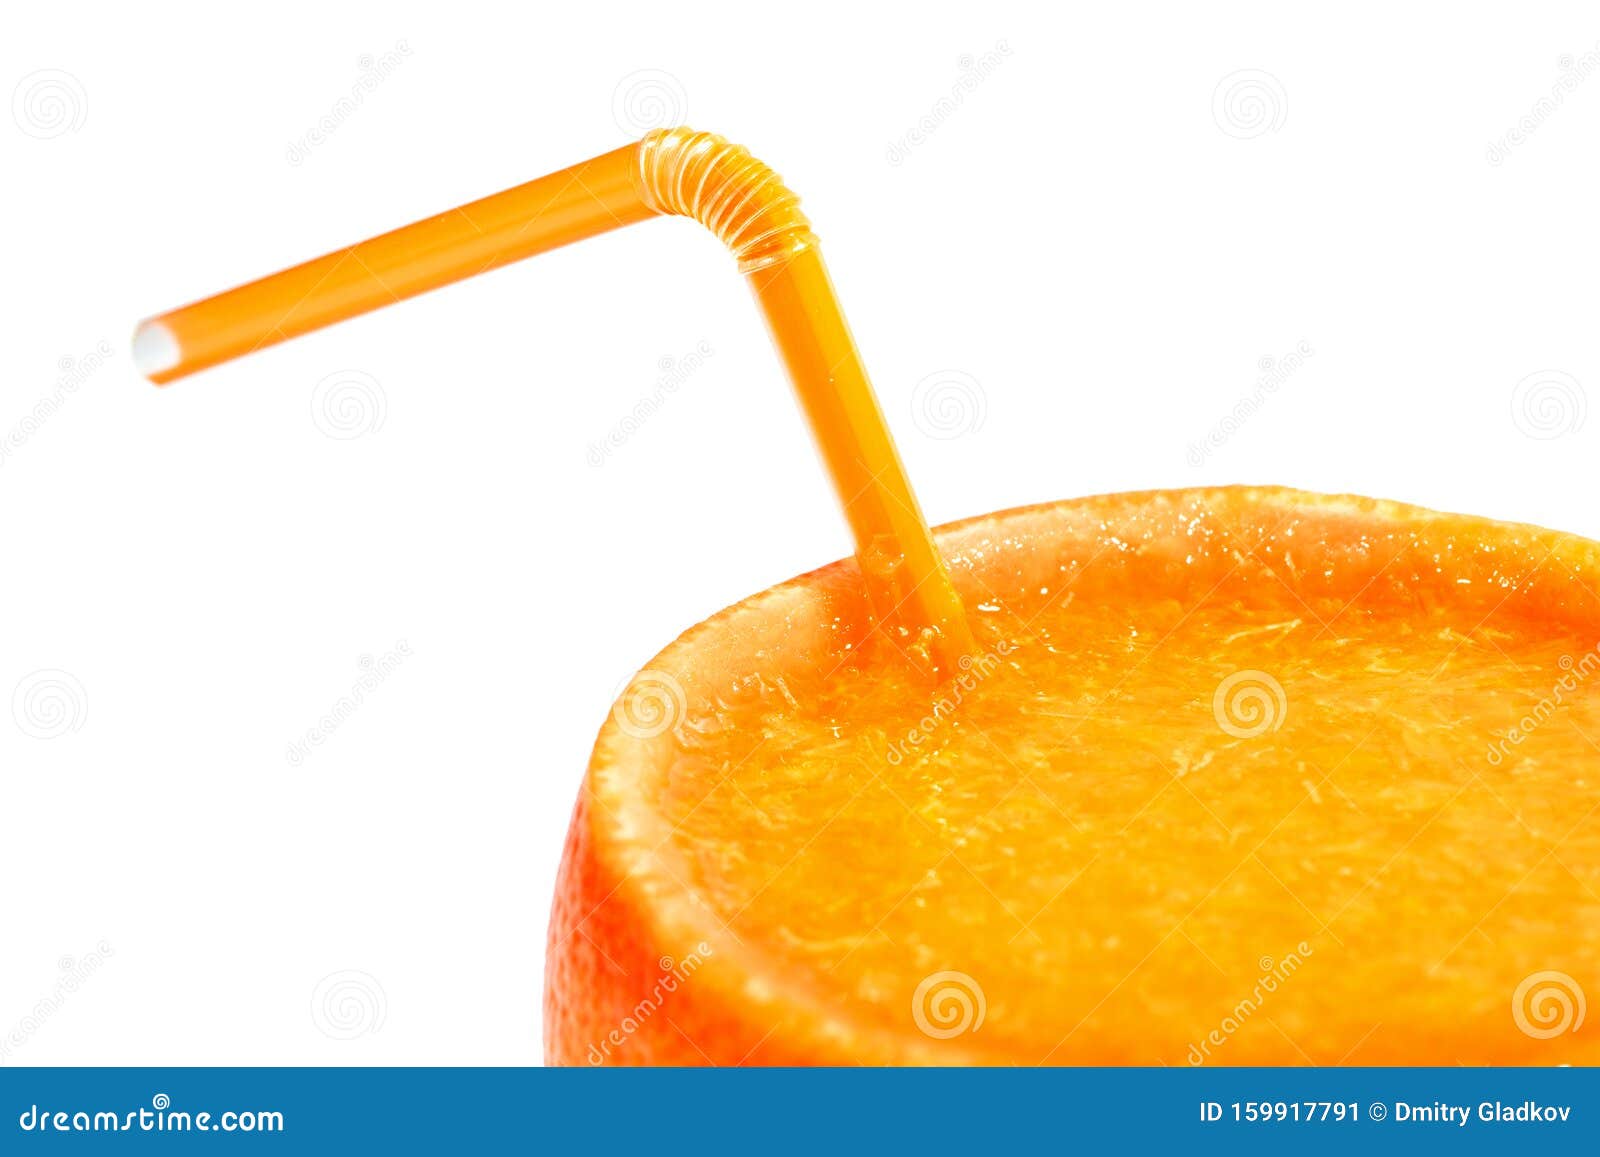 Orange Juice With Pulp In Orange Peel With Tube Isolated Stock Image Image Of Nutrient Citrus